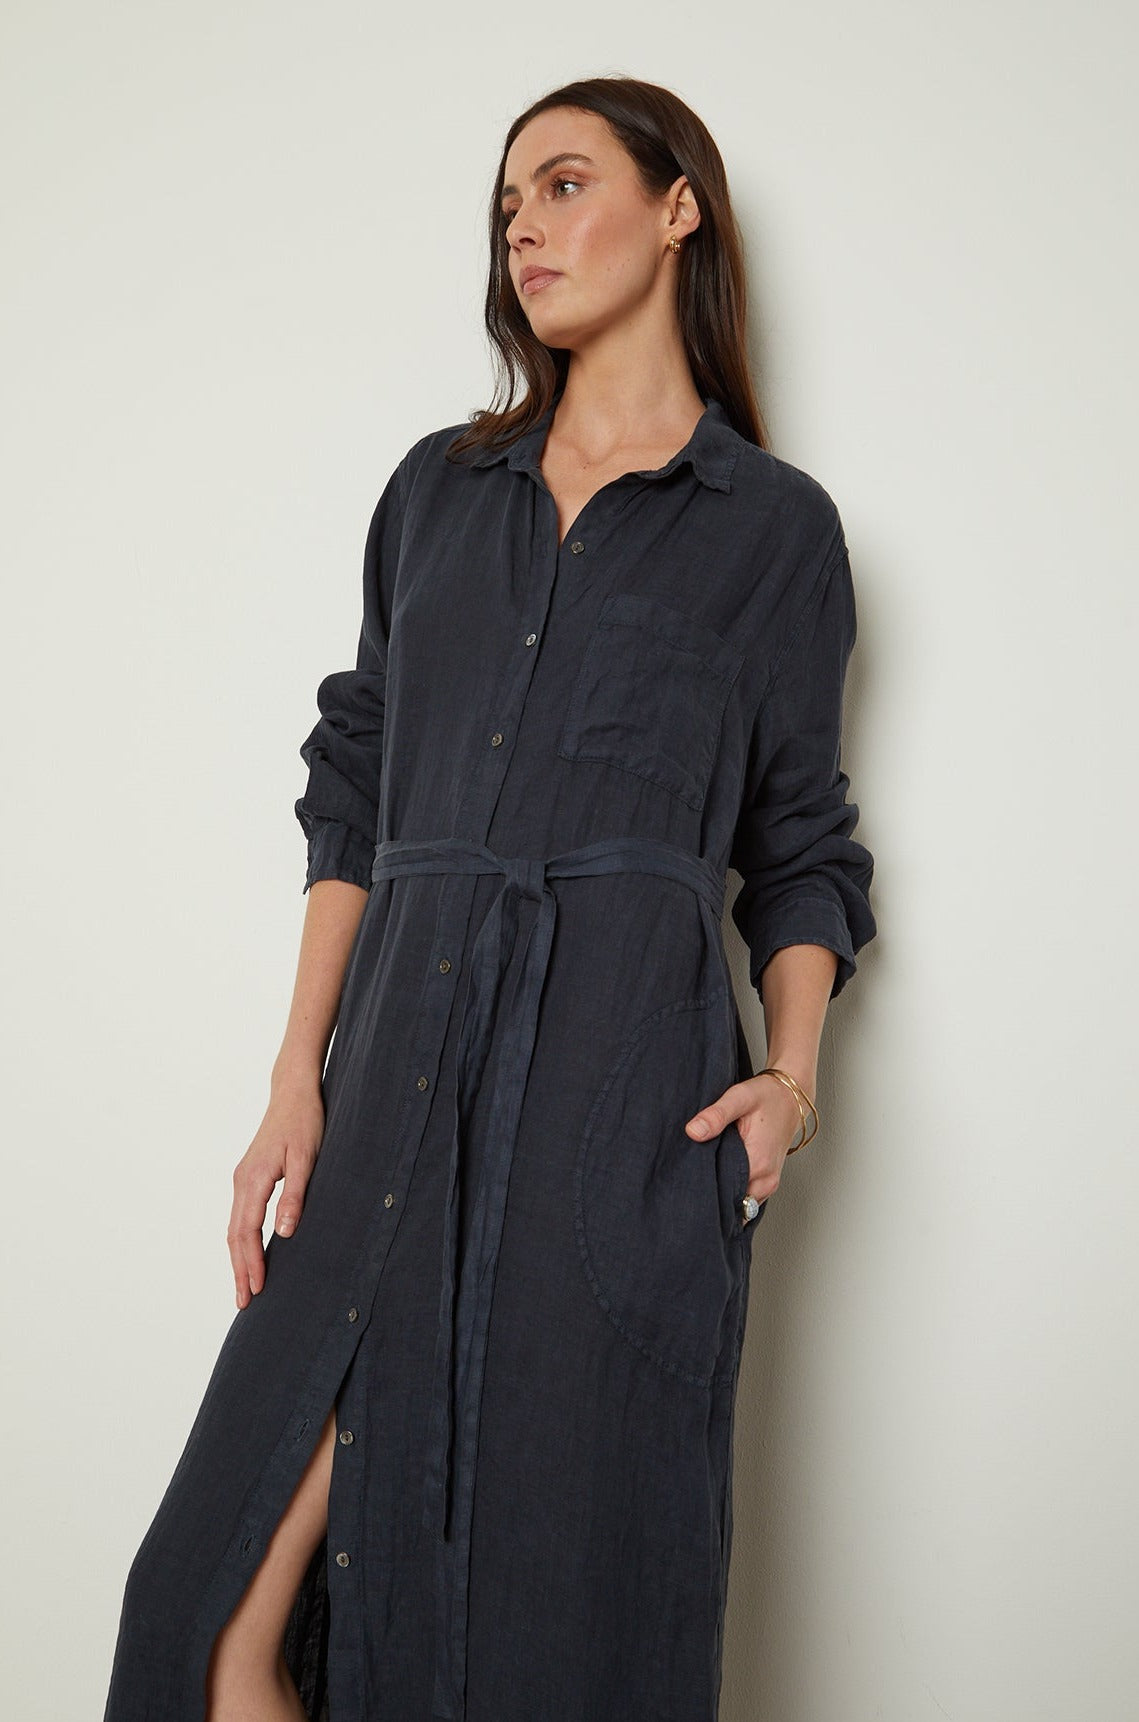 The model is wearing a JORA LINEN BUTTON-UP DRESS by Velvet by Graham & Spencer.-26143085592769